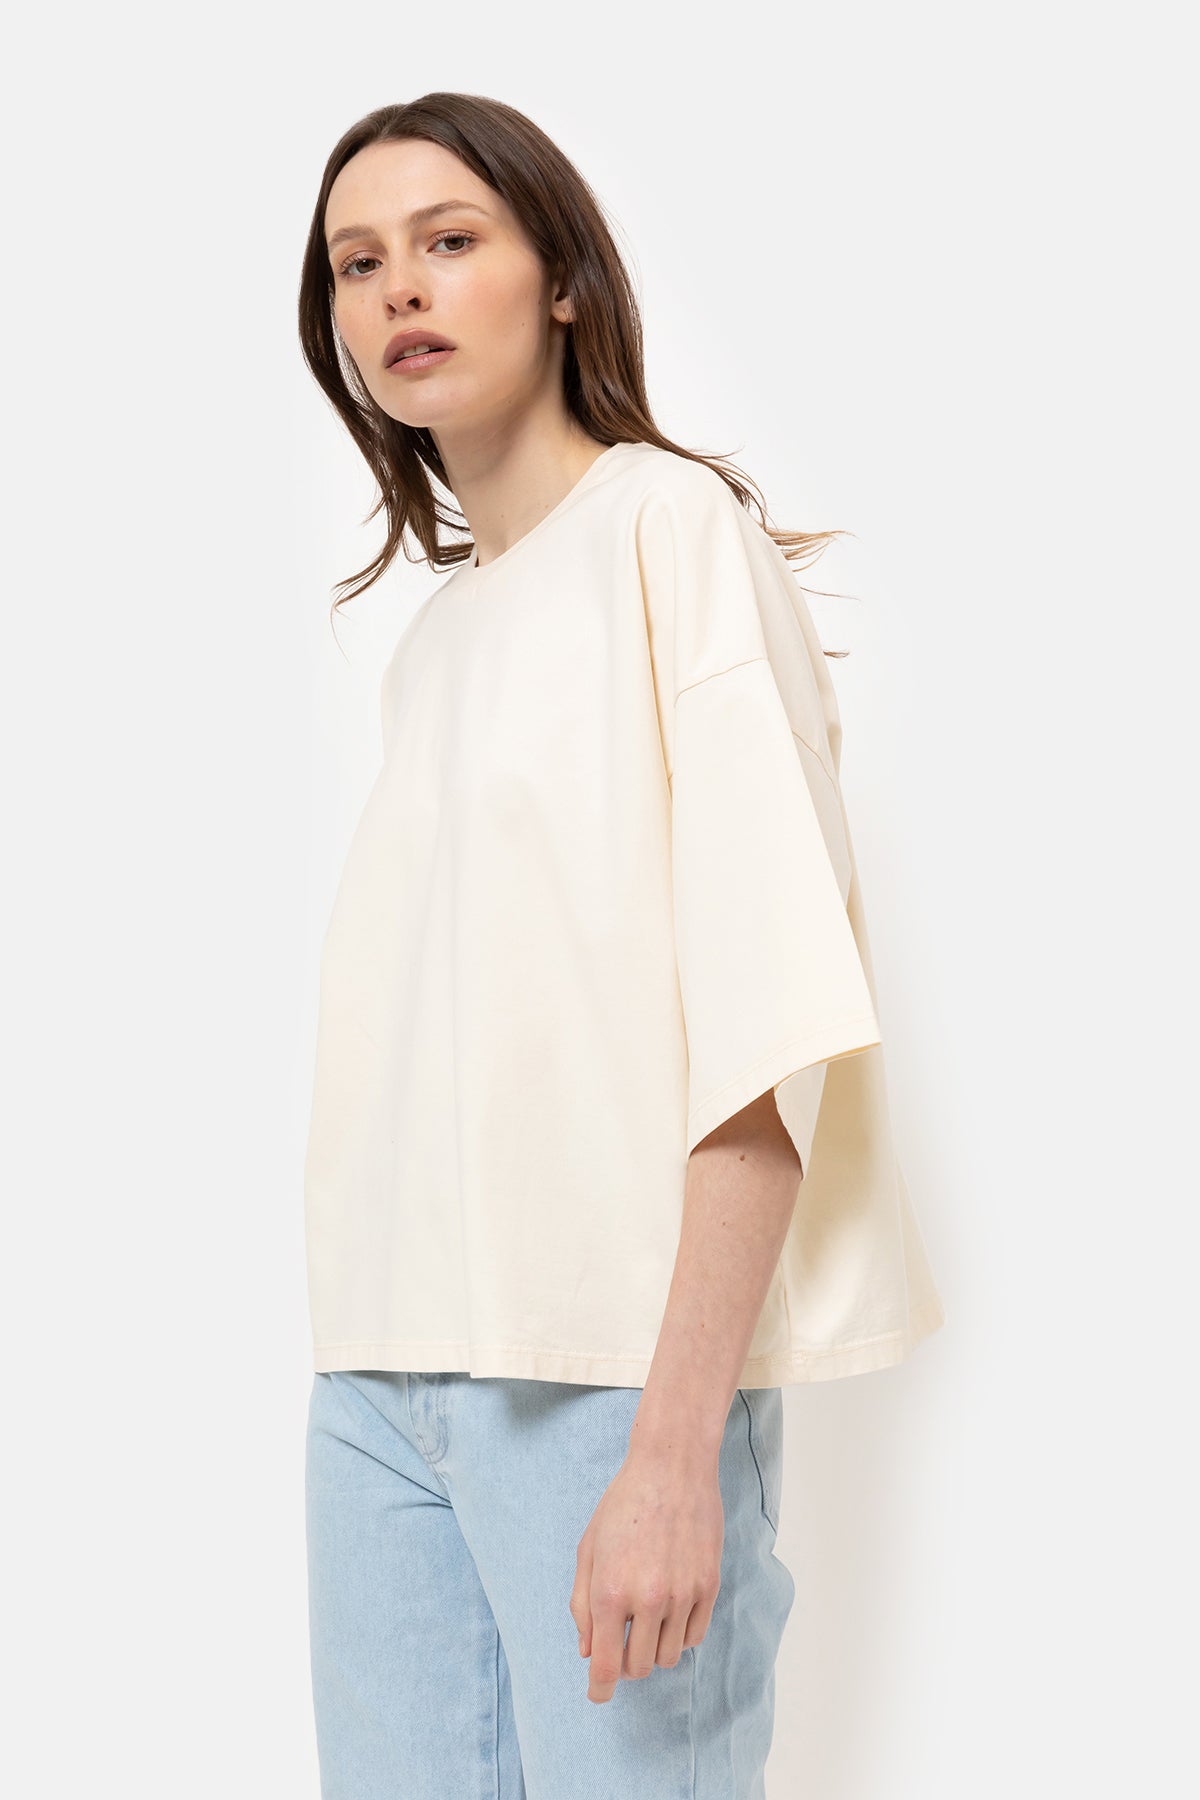 Eloise Boxy T-Shirt | Cream